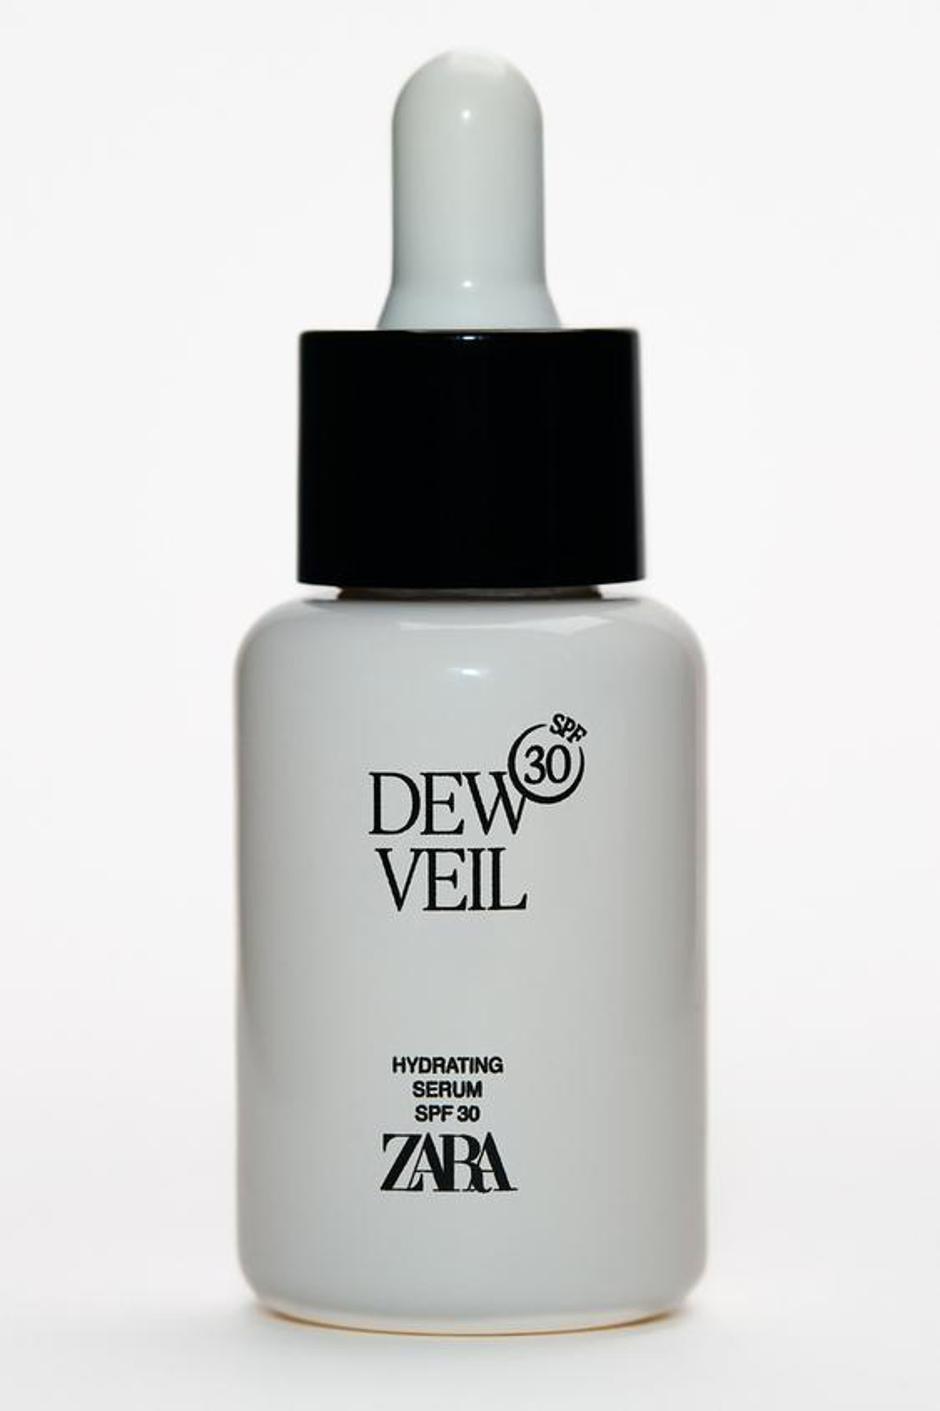 Foto: Zara, Dew Veil, hidratantni serum | Autor: Zara